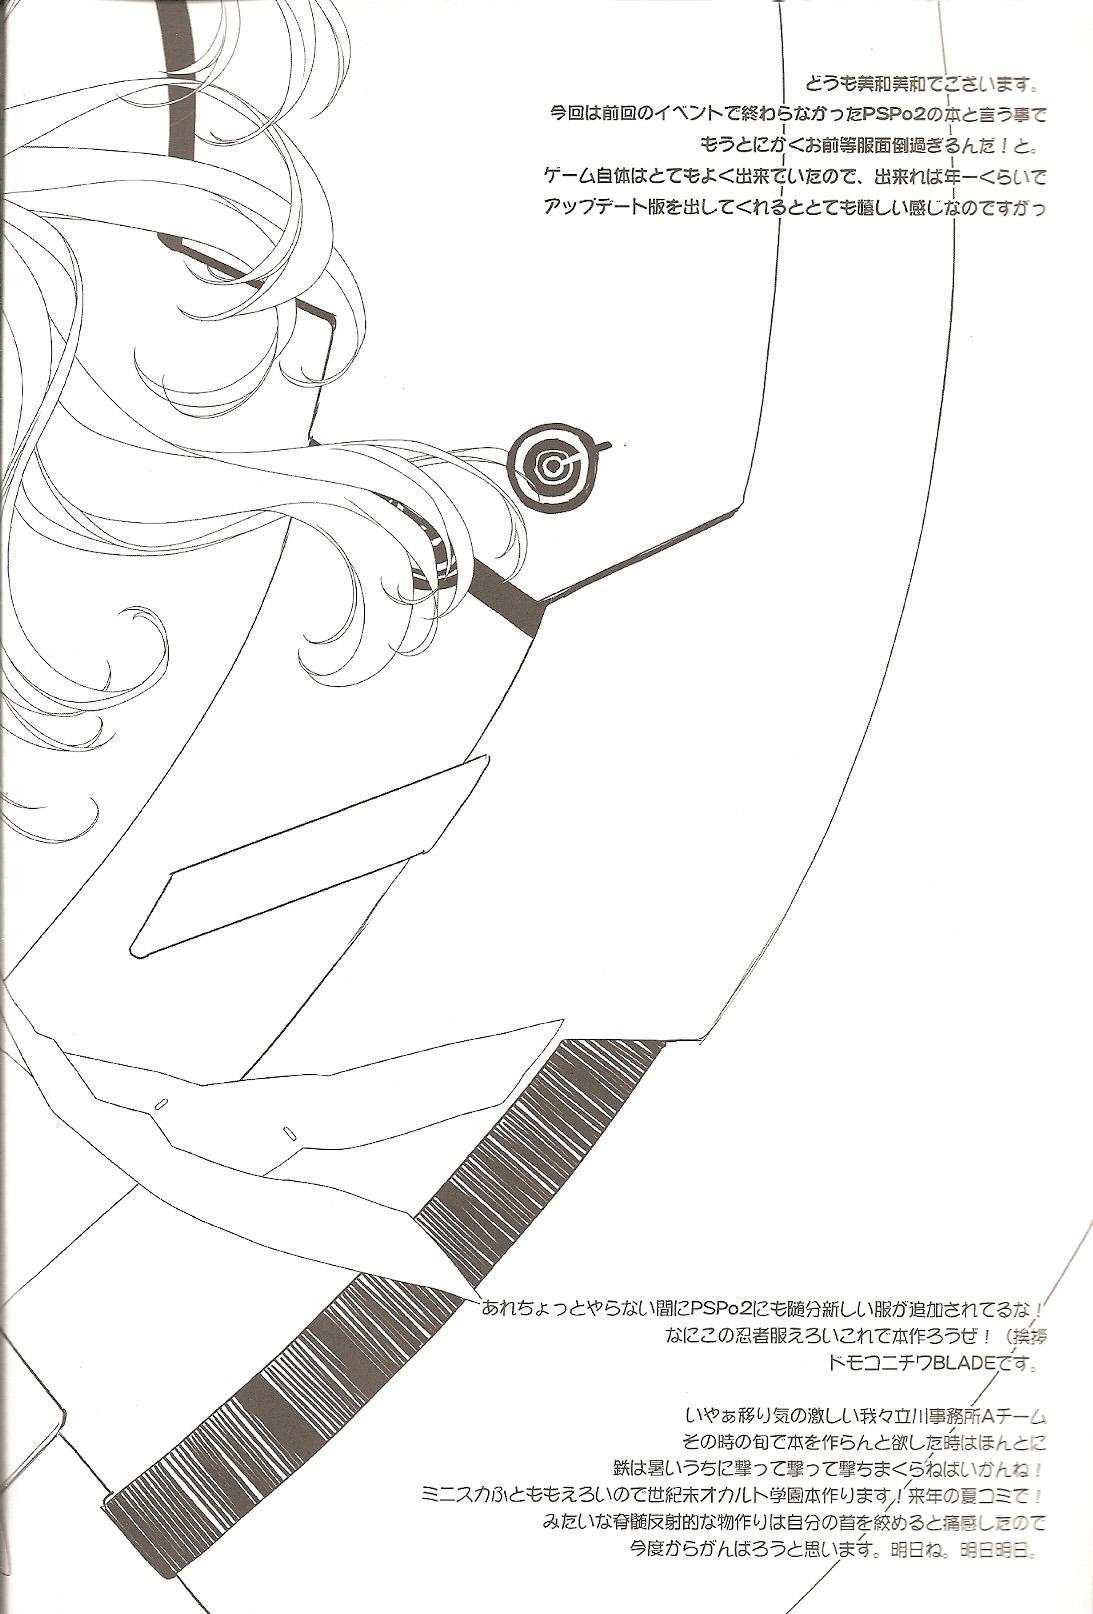 Perfect Genei no Kyouen - Phantasy star portable 2 Closeups - Page 4